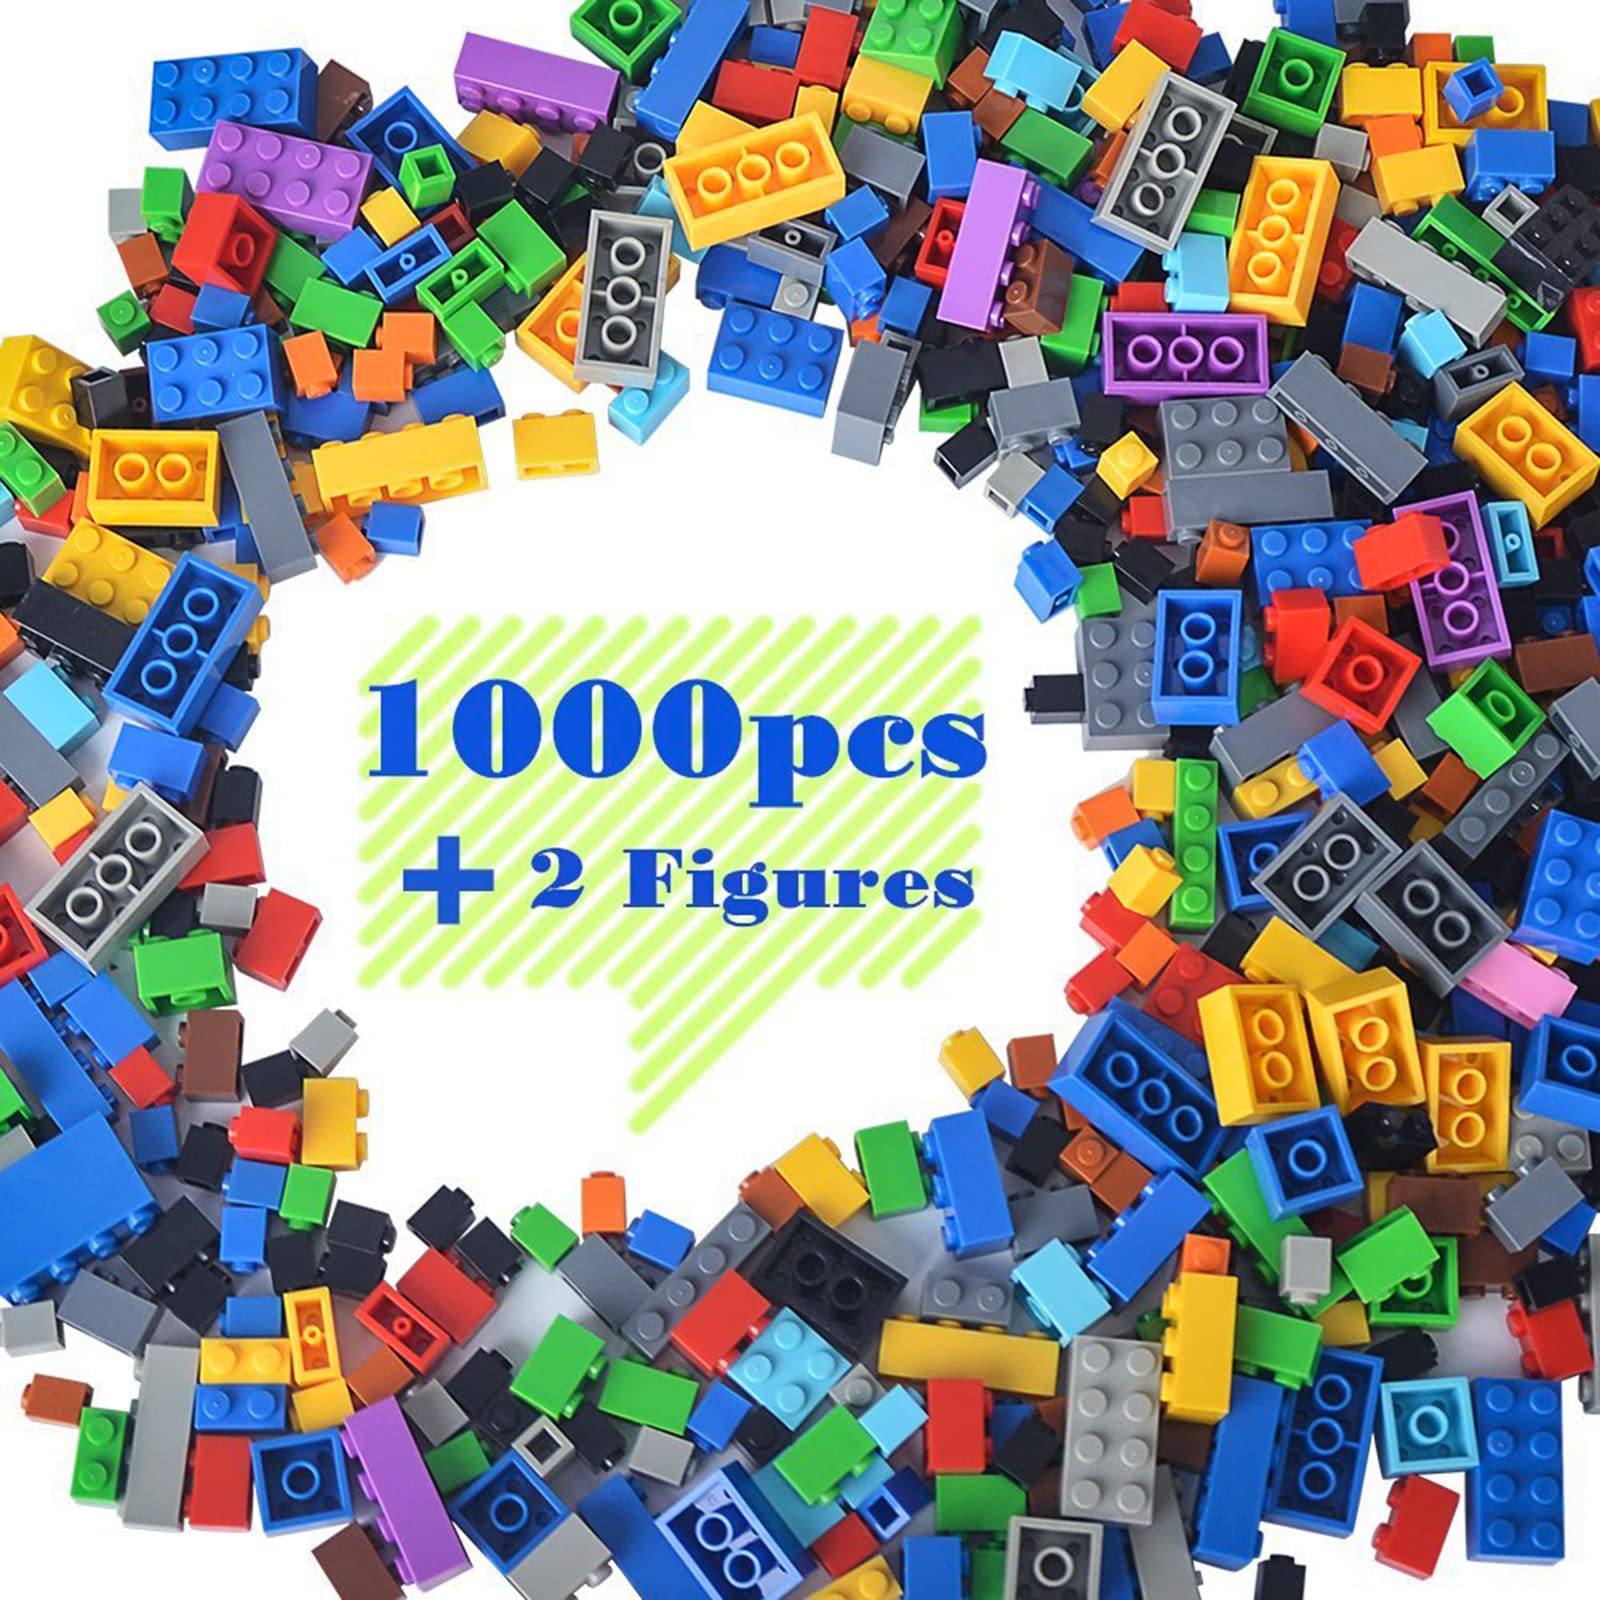 Book Cover Building Bricks Compatible with Lego - 1000 Pieces Bulk Building Blocks in Random Color - Mixed Shape - Includes 2 Figures